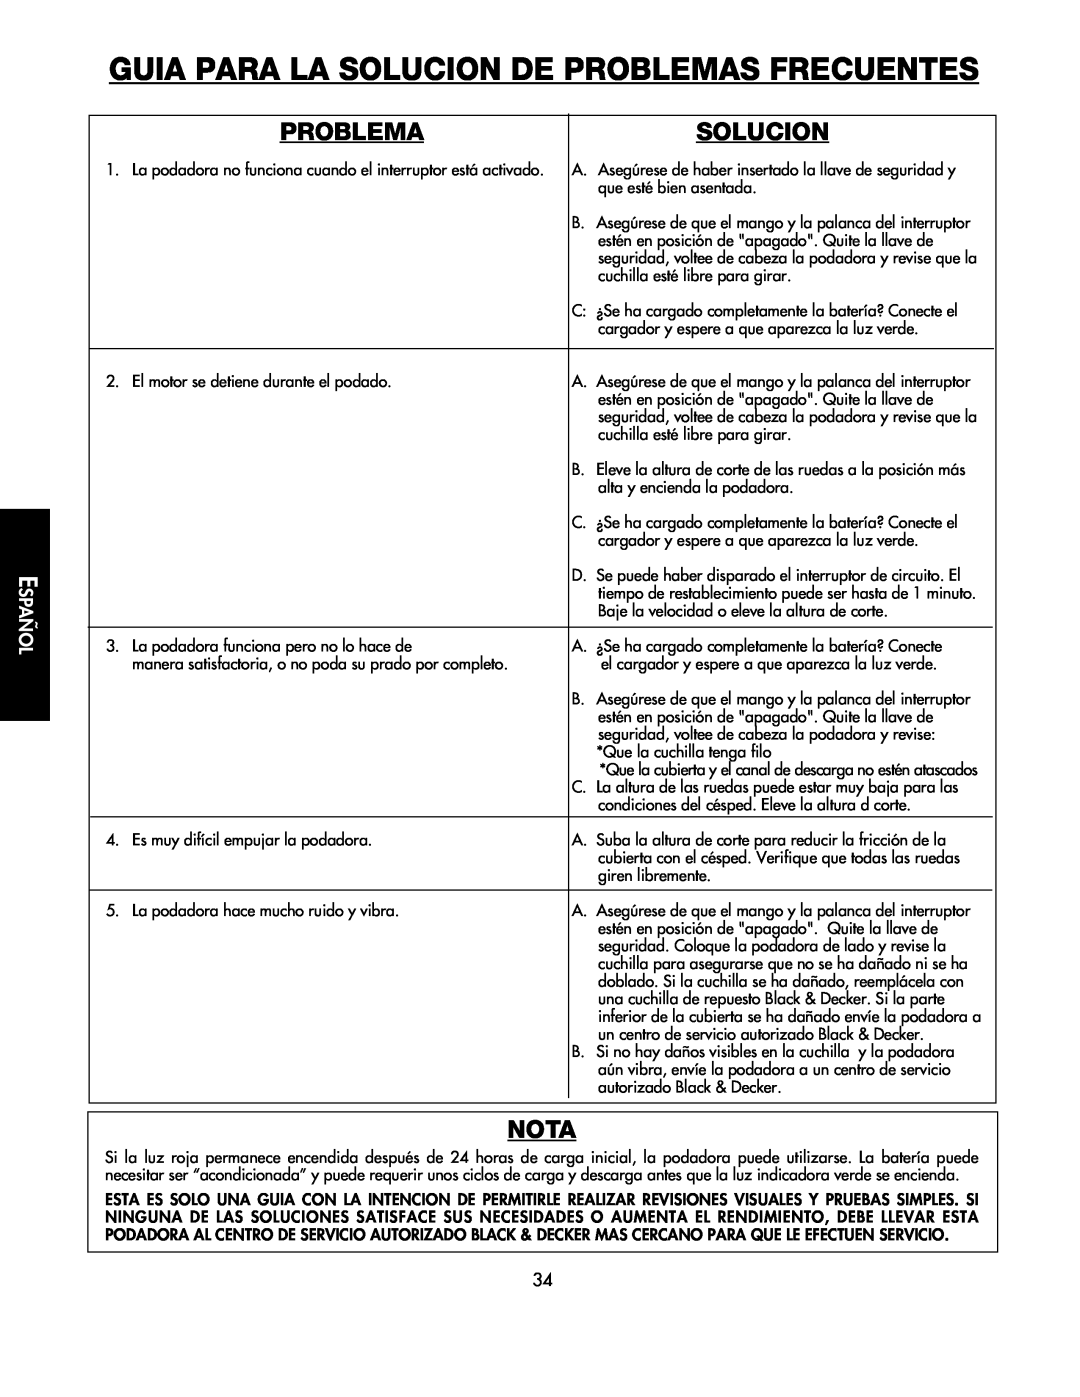 Black & Decker CMM1000 instruction manual Guia Para La Solucion De Problemas Frecuentes, Nota, Español 